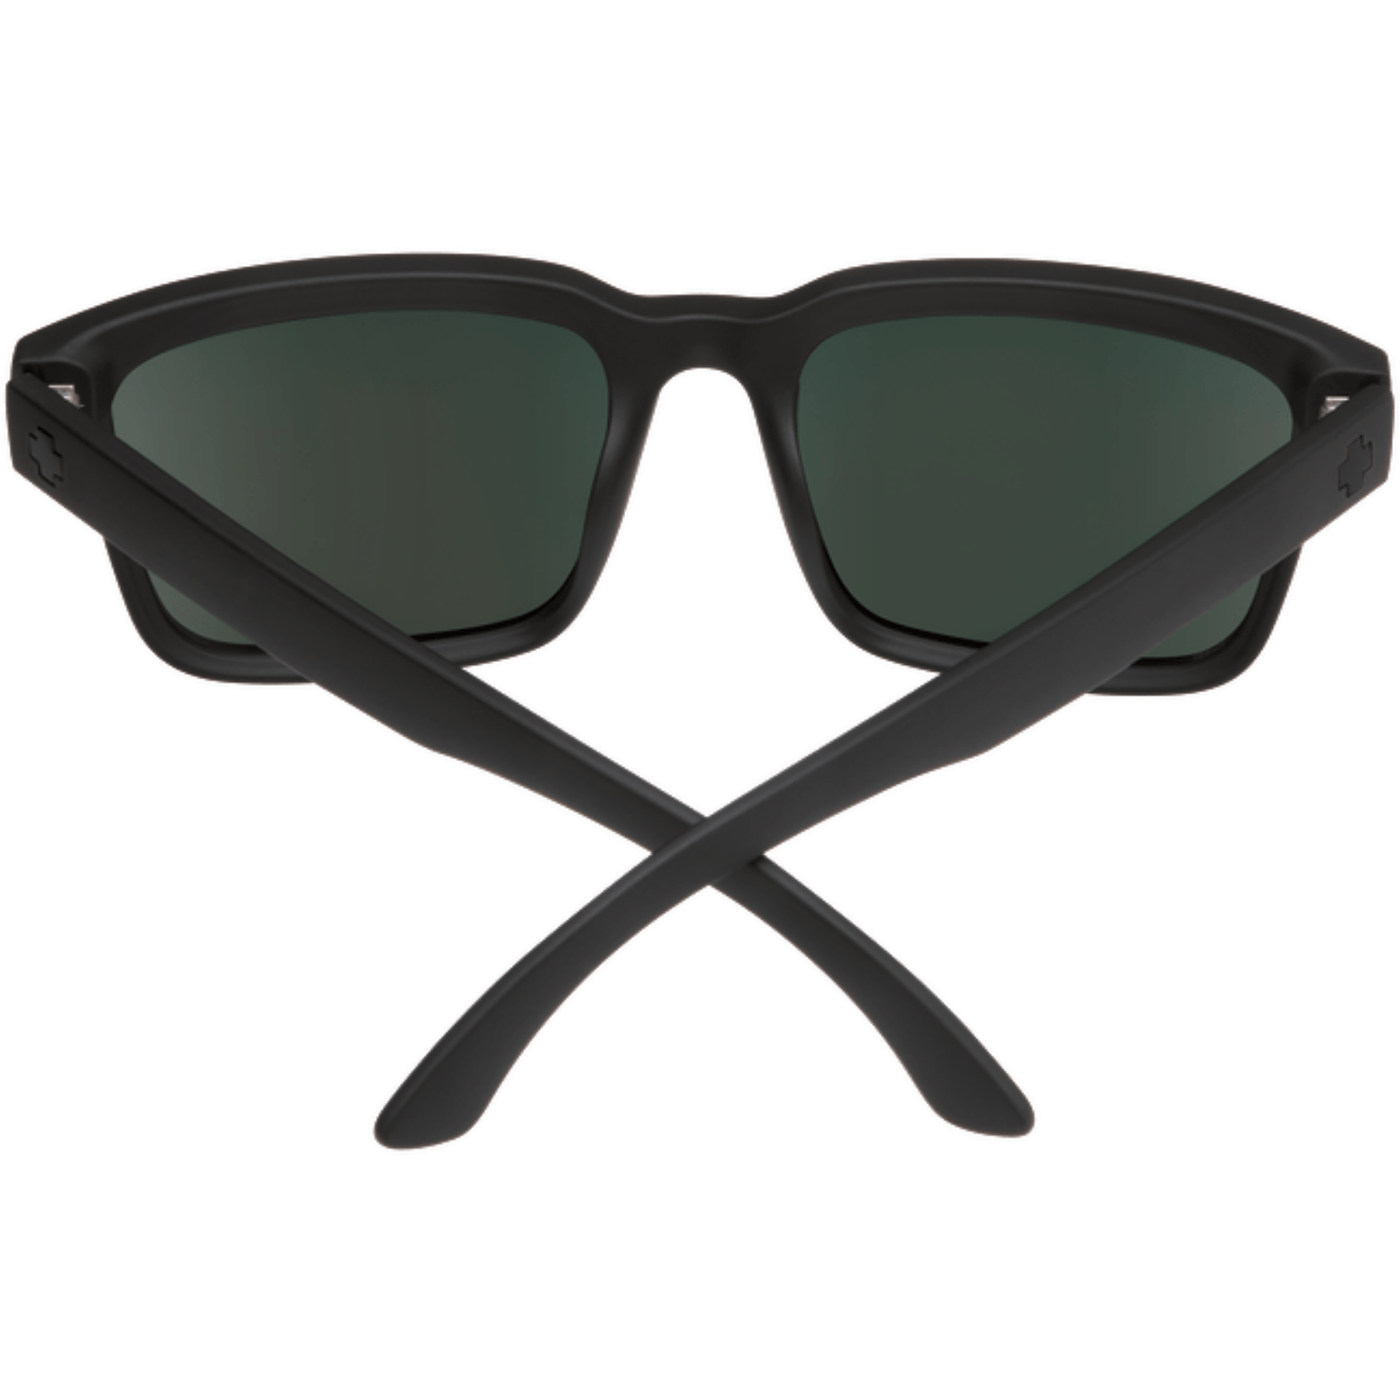 square black frame sunglasses